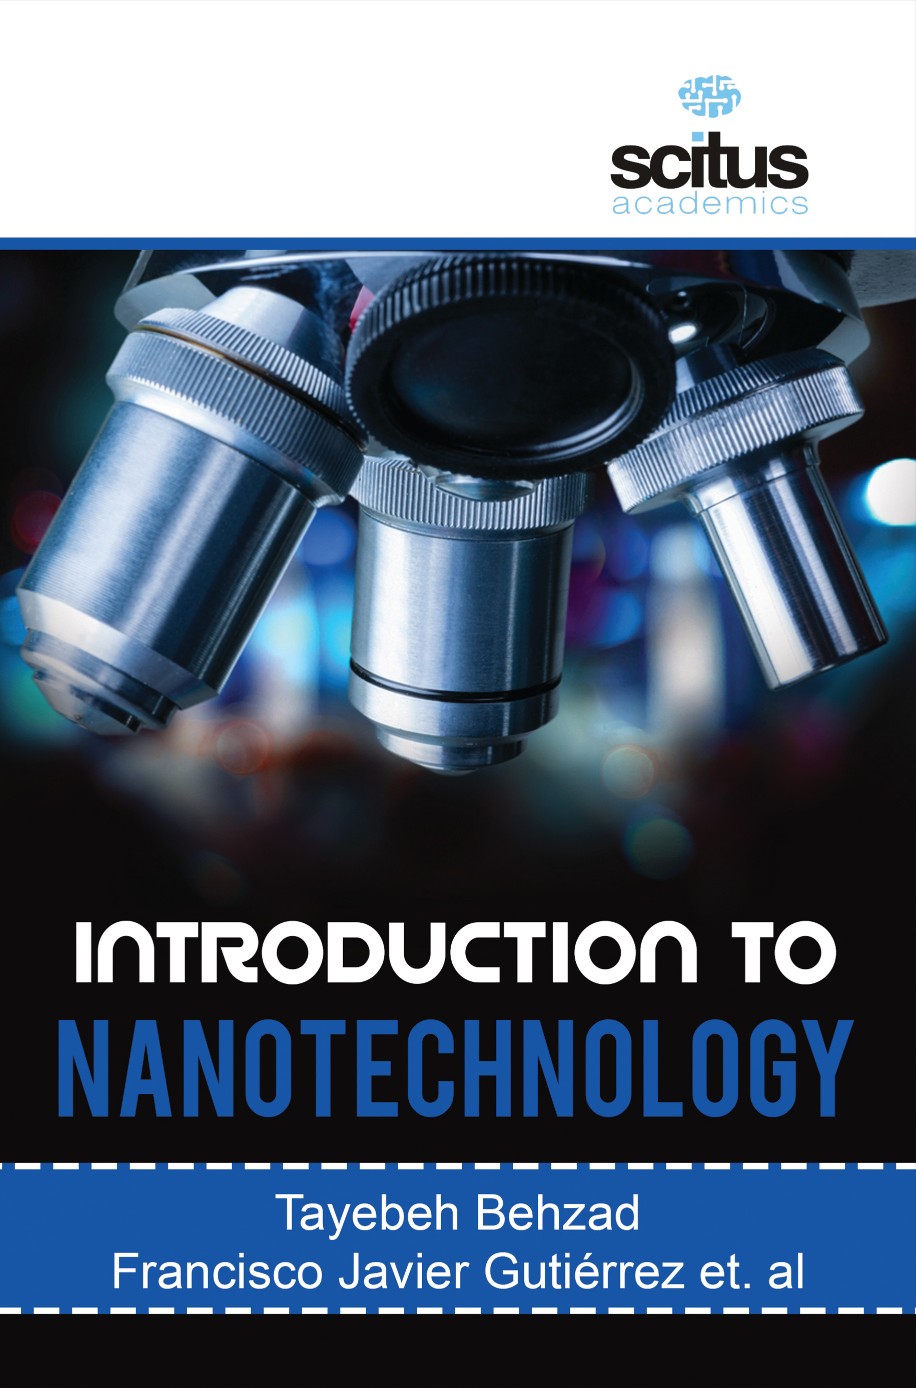 nanotechnology introduction essay